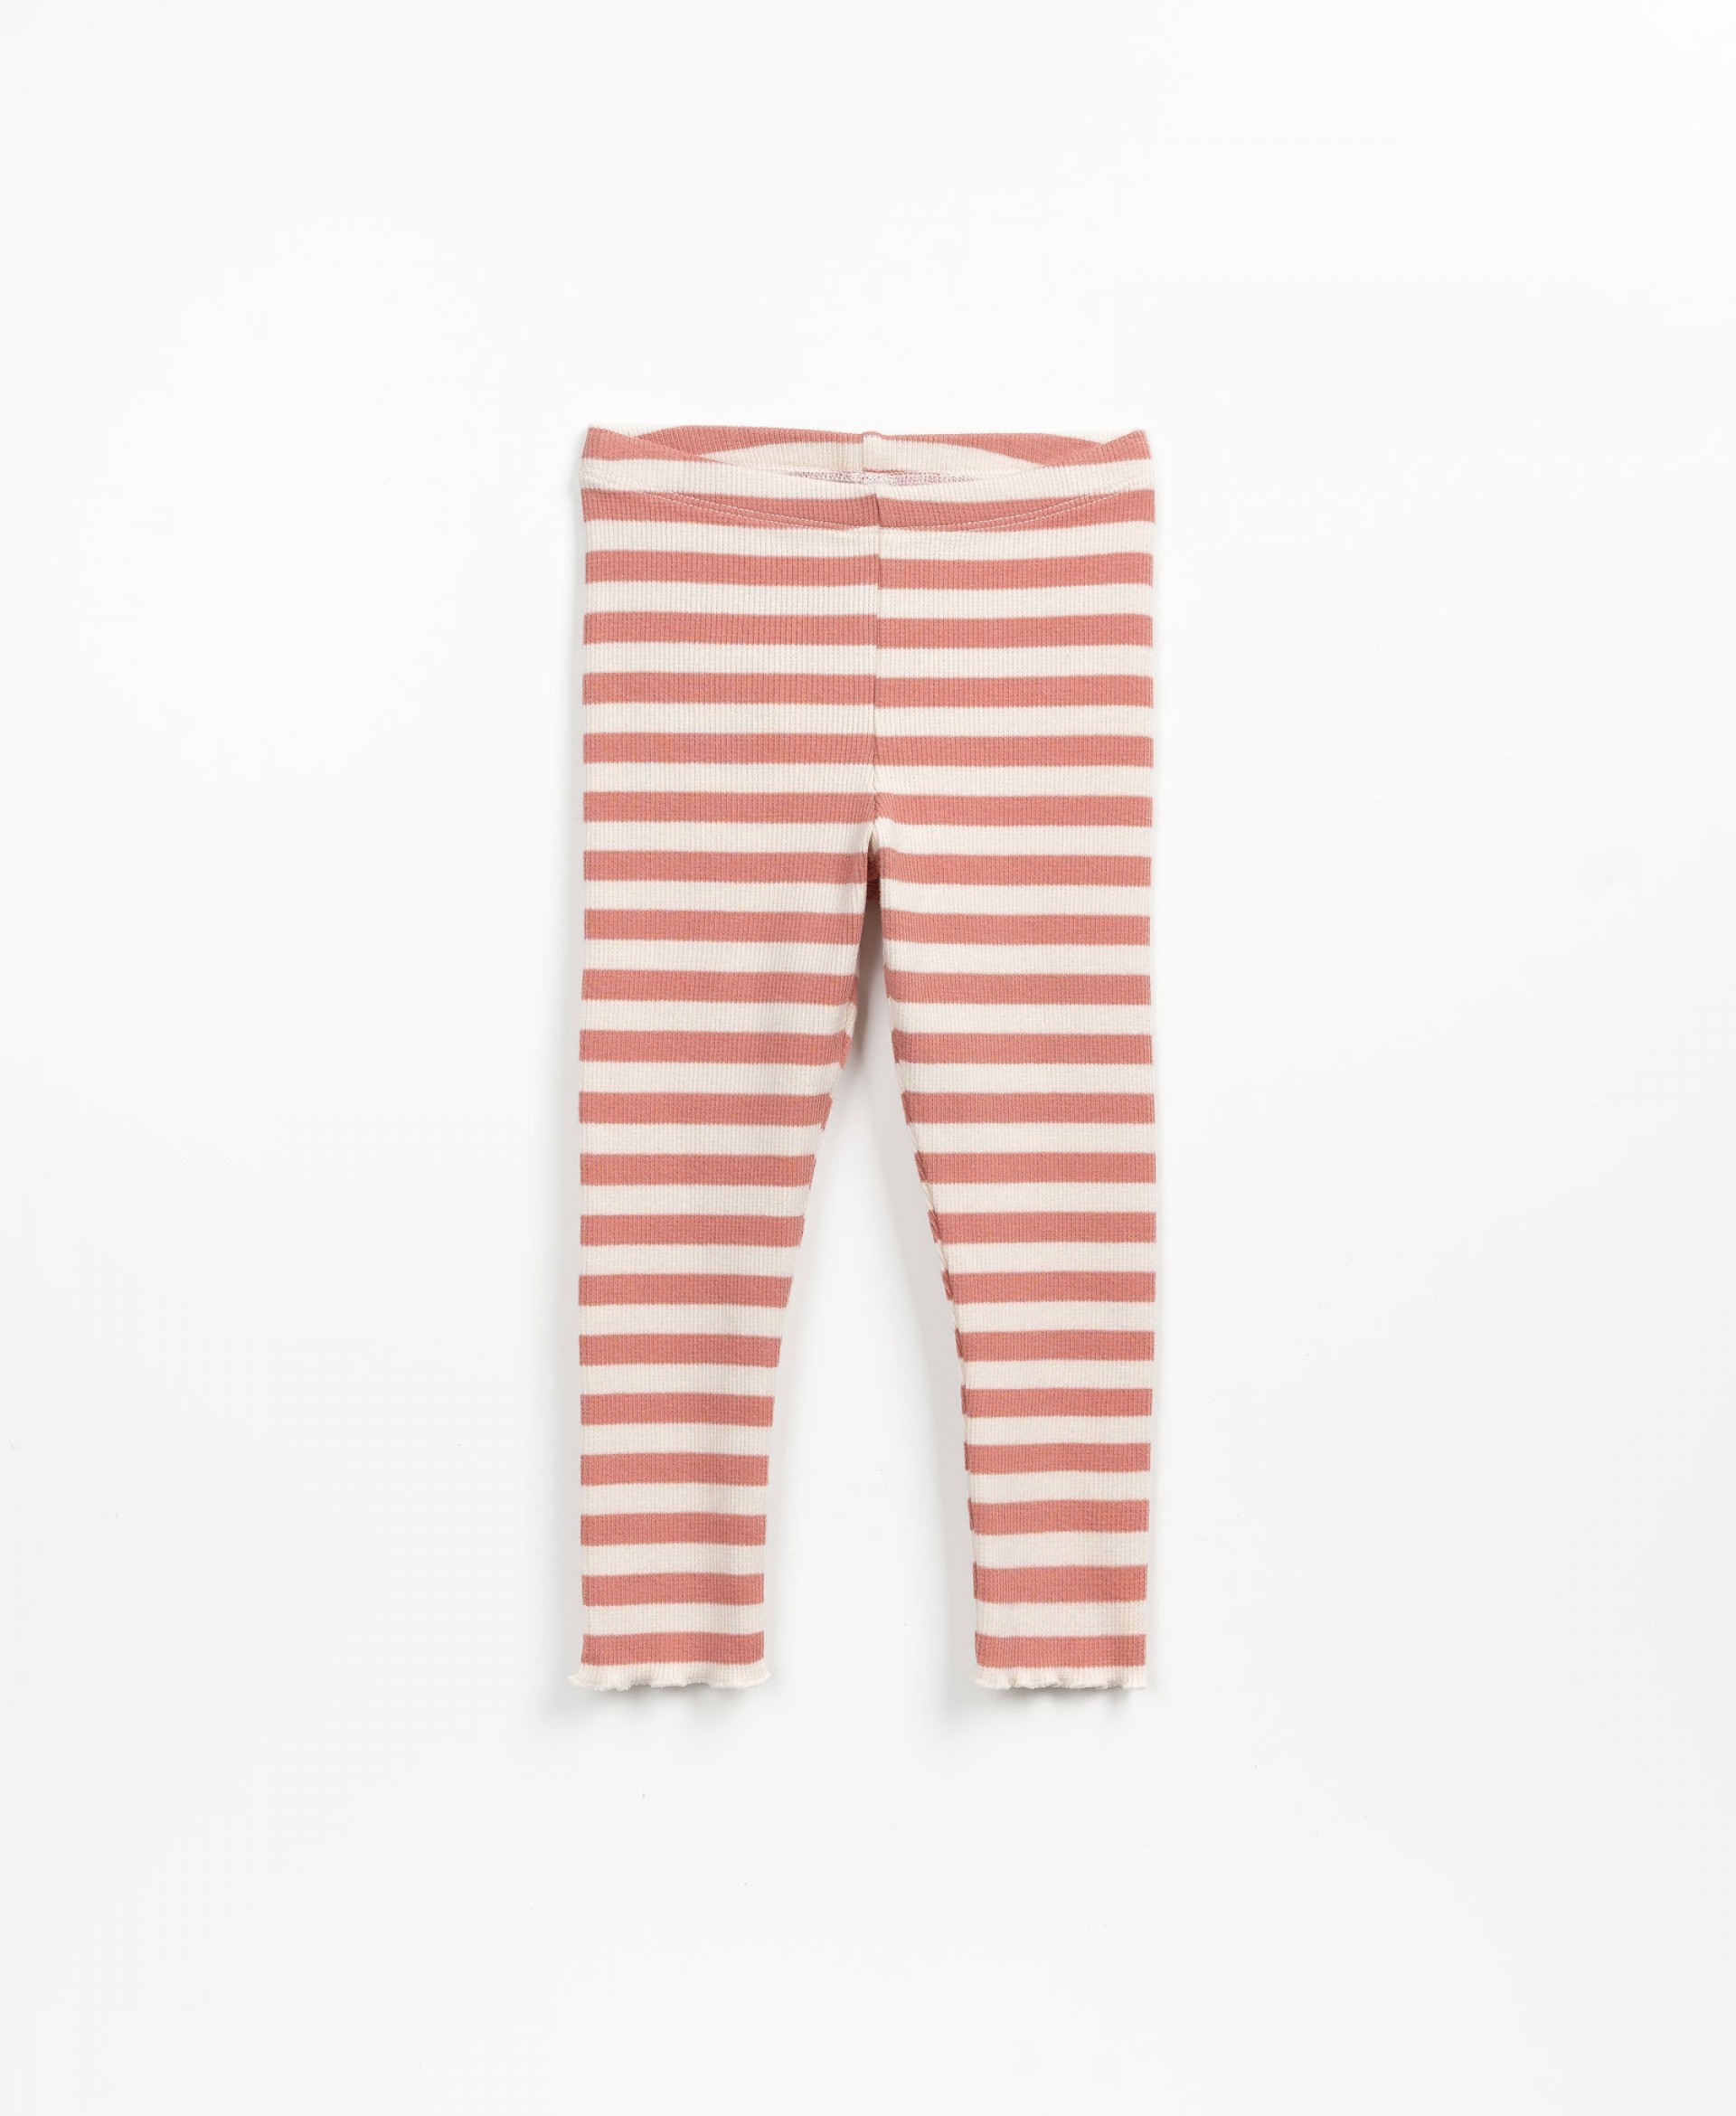 Striped leggings | Textile Art